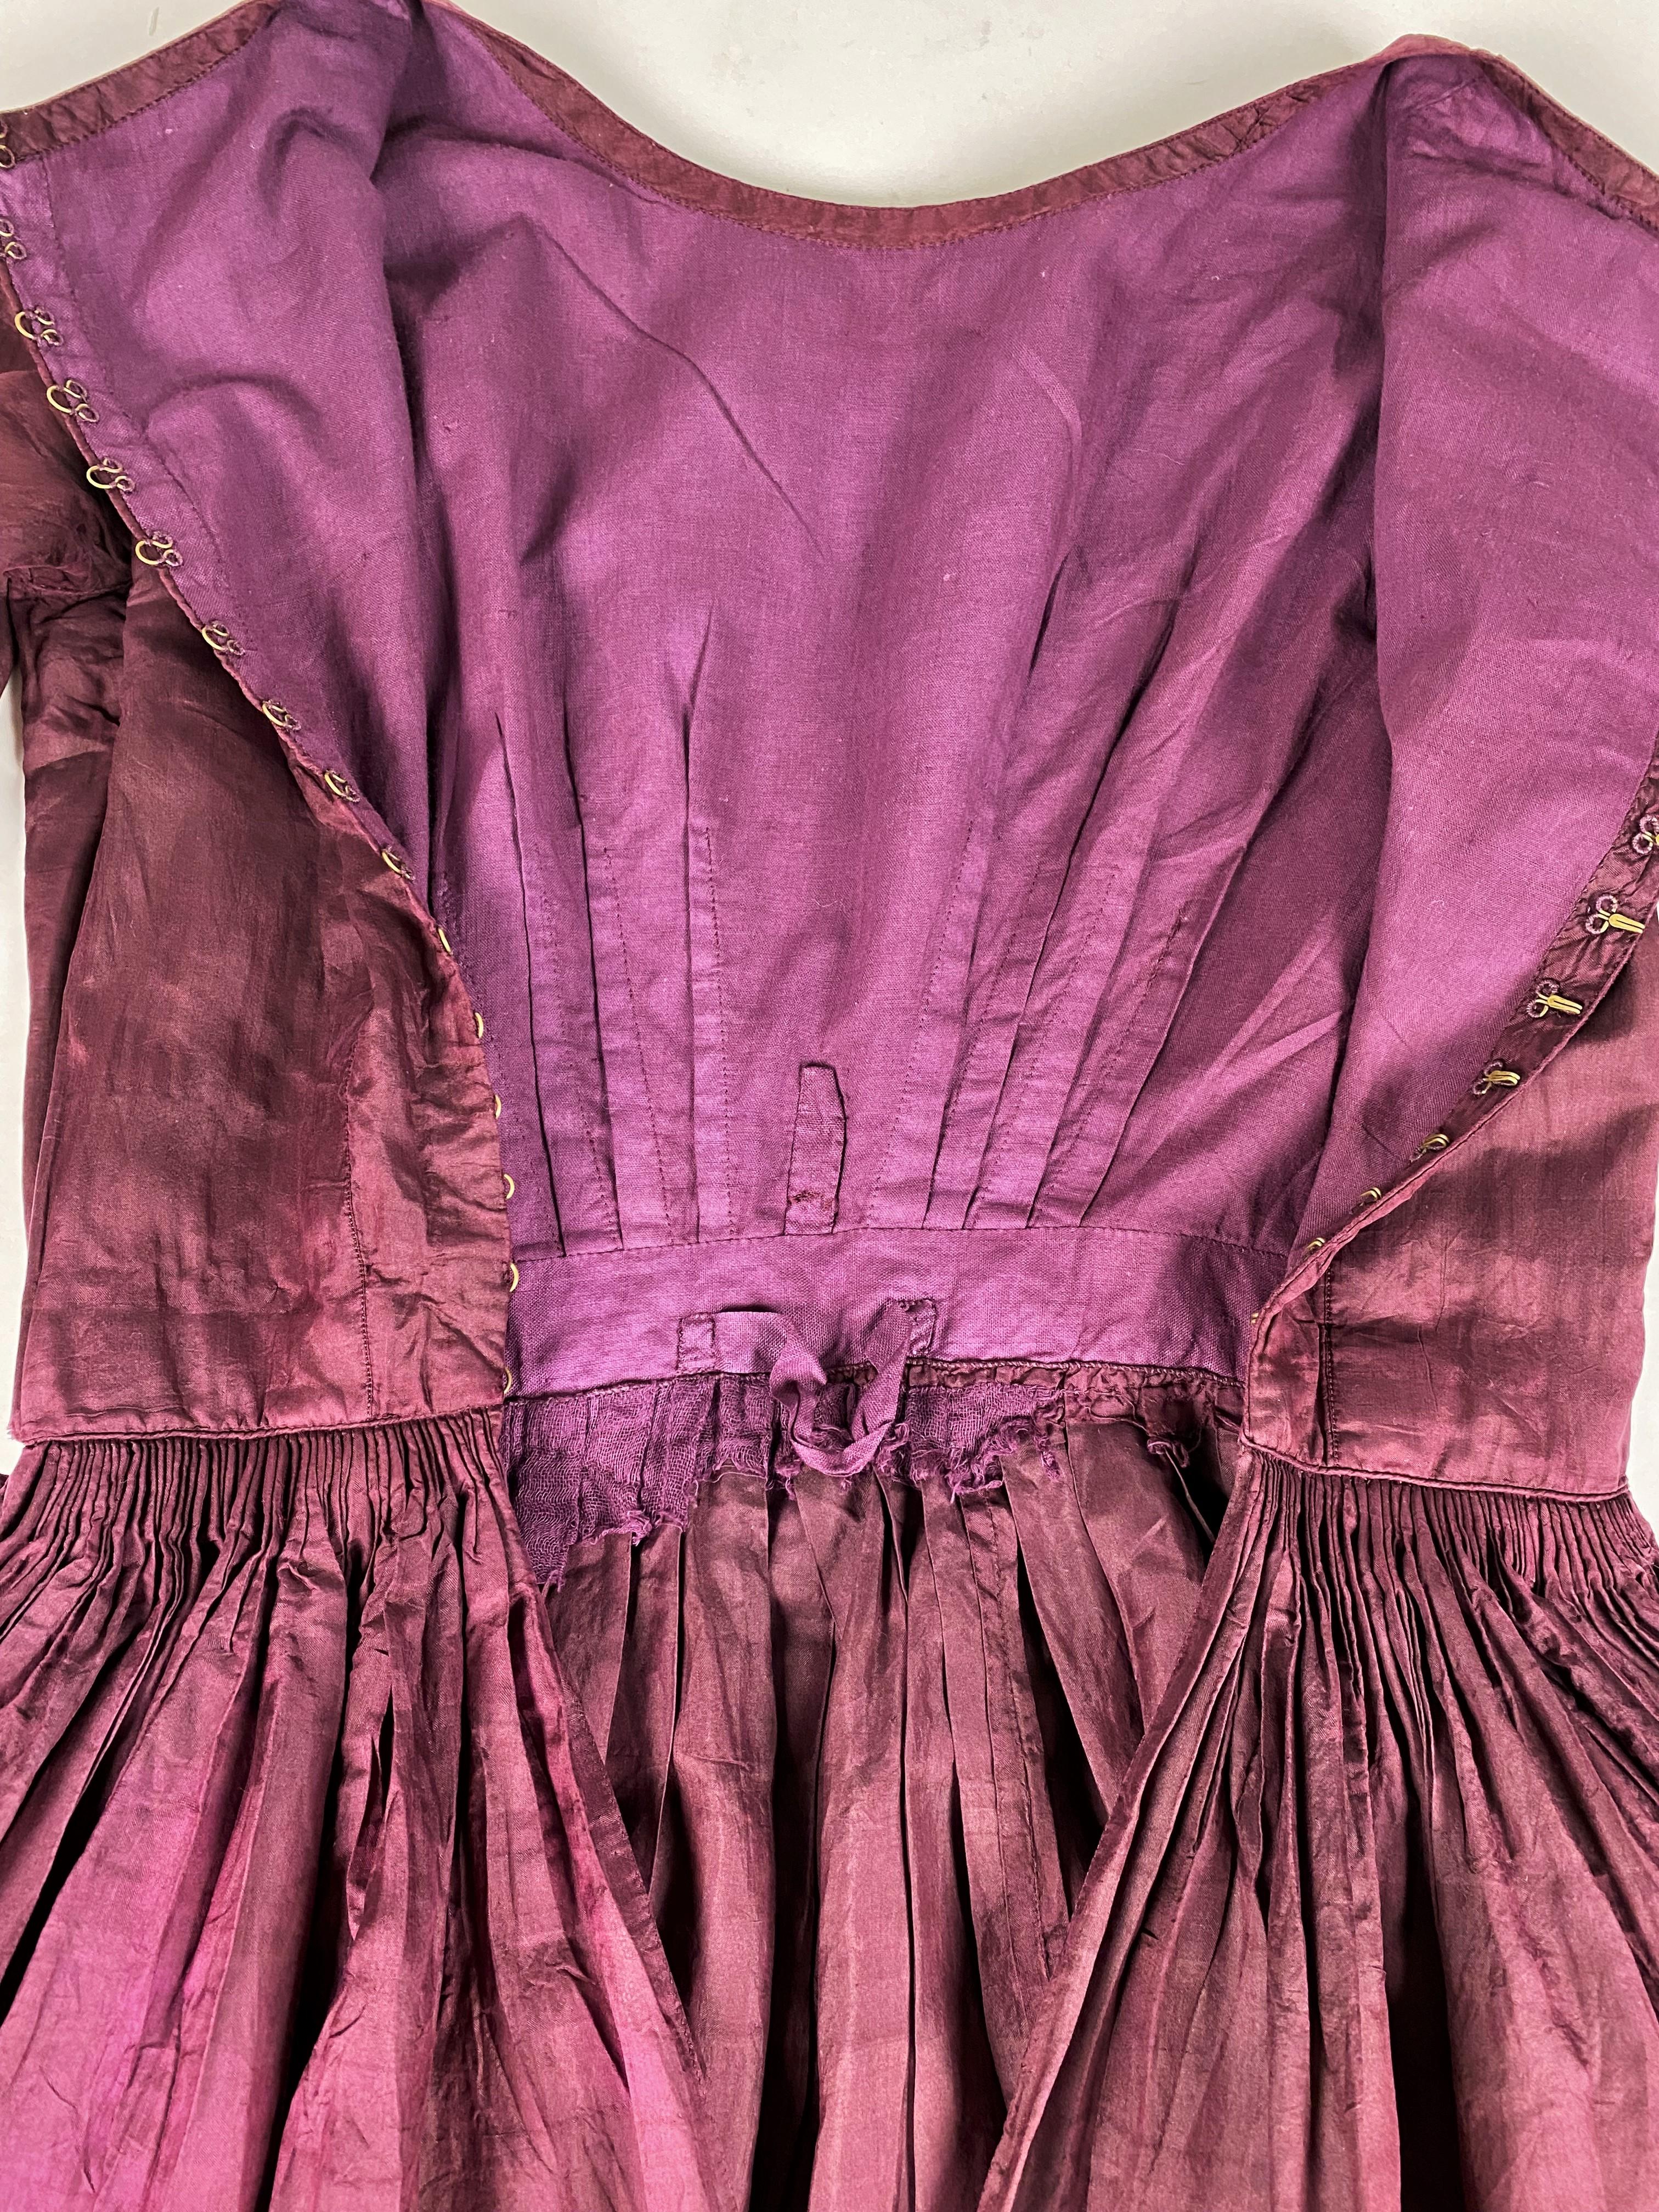 A Dyed Taffeta-Aubergine French Day Dress Circa 1845 9